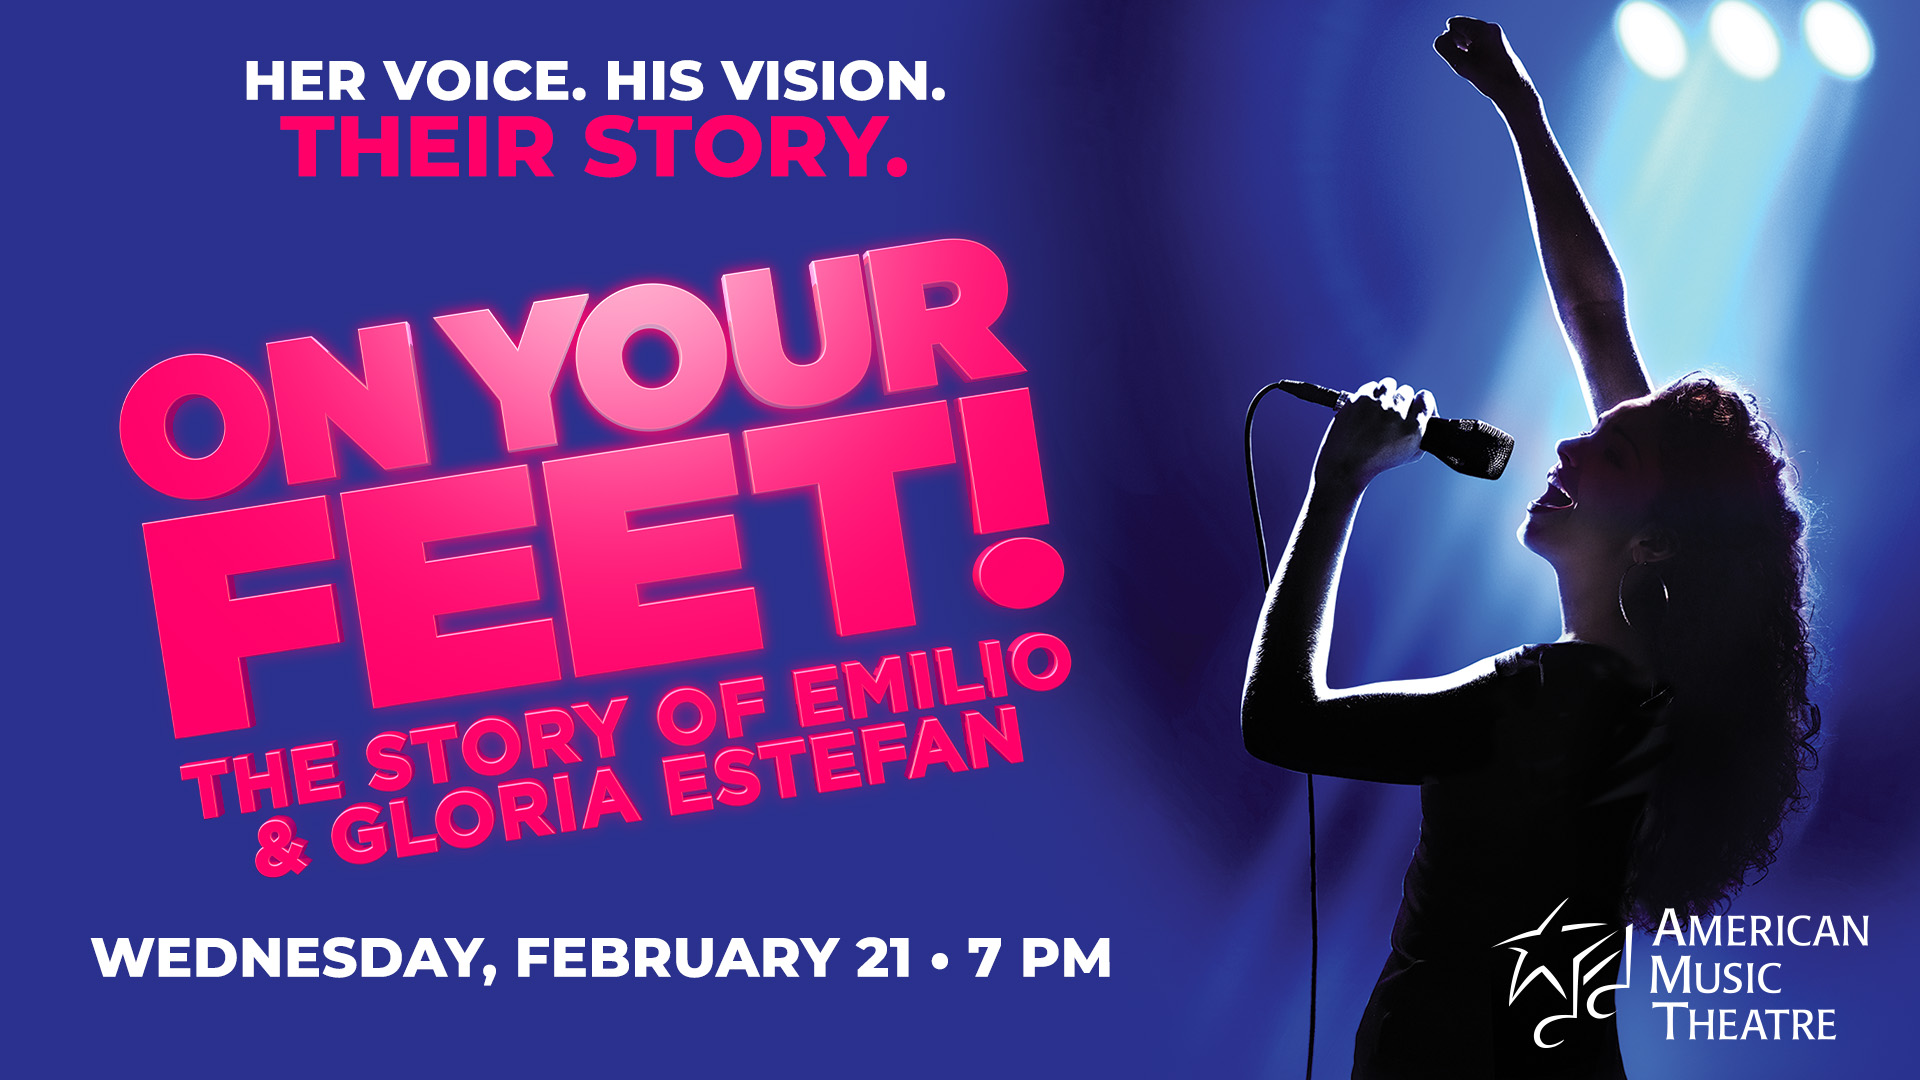 ON YOUR FEET! The Story of Emilio & Gloria Estafan